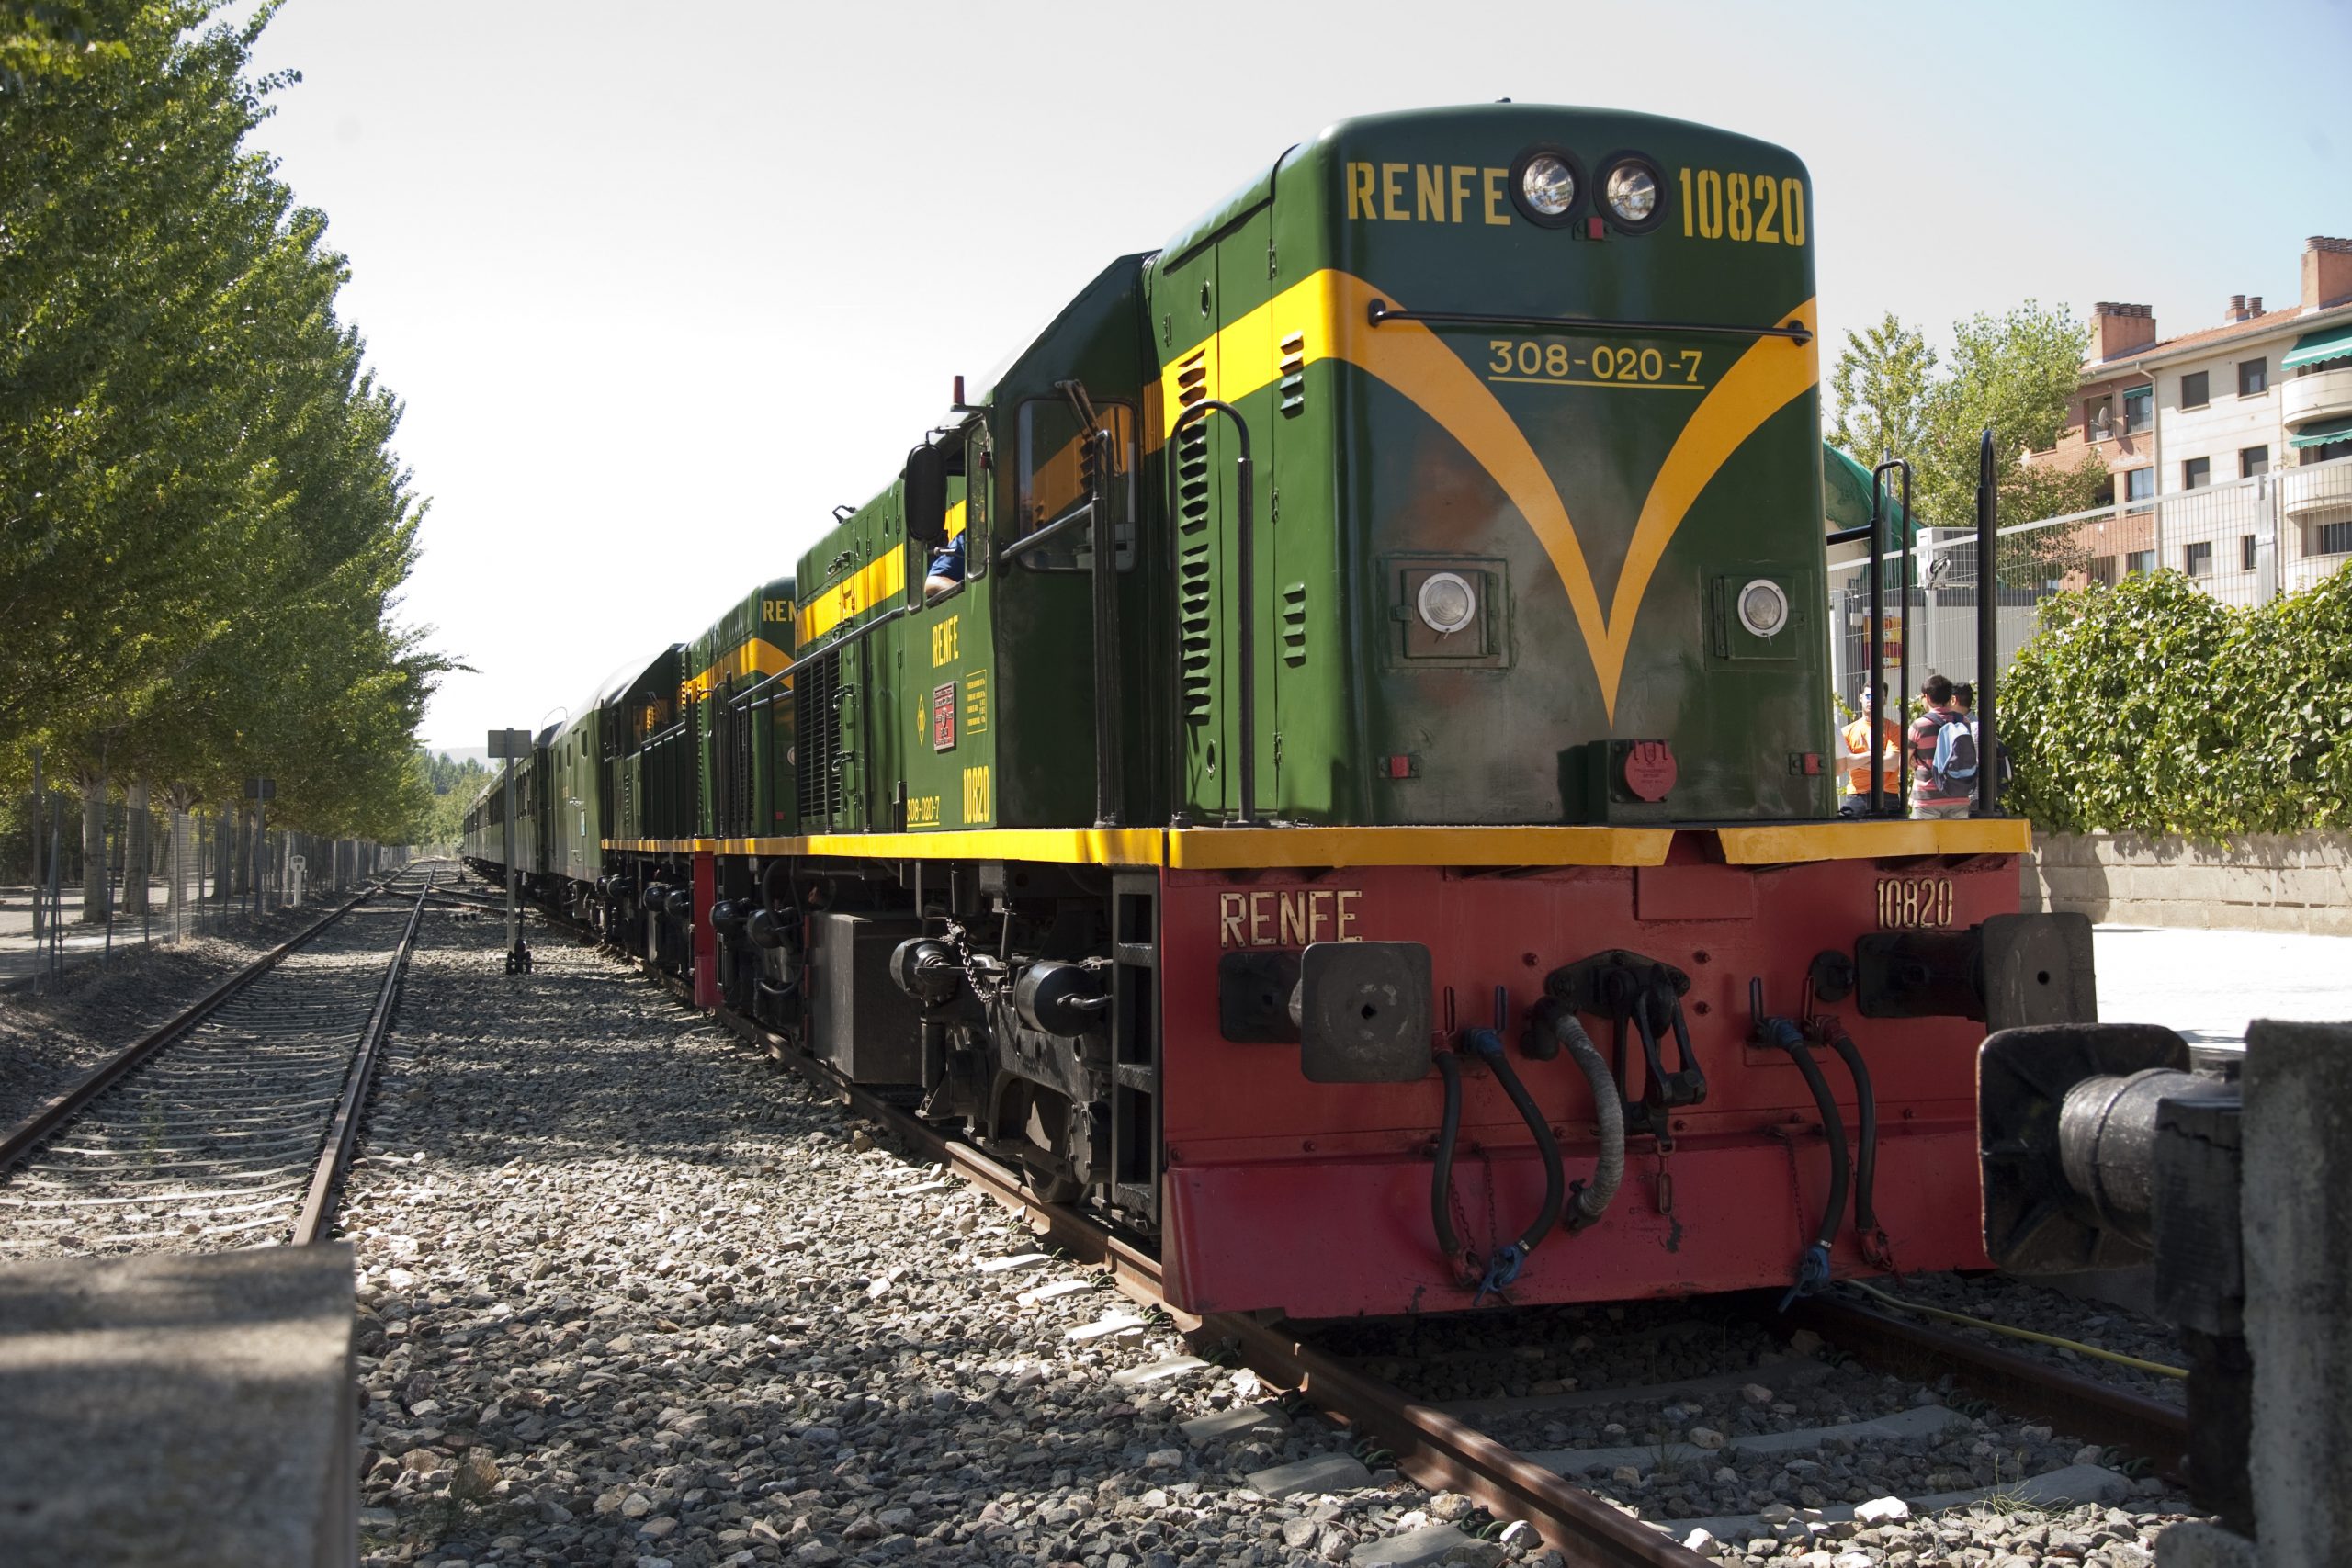 Tren historic FGC TL scaled